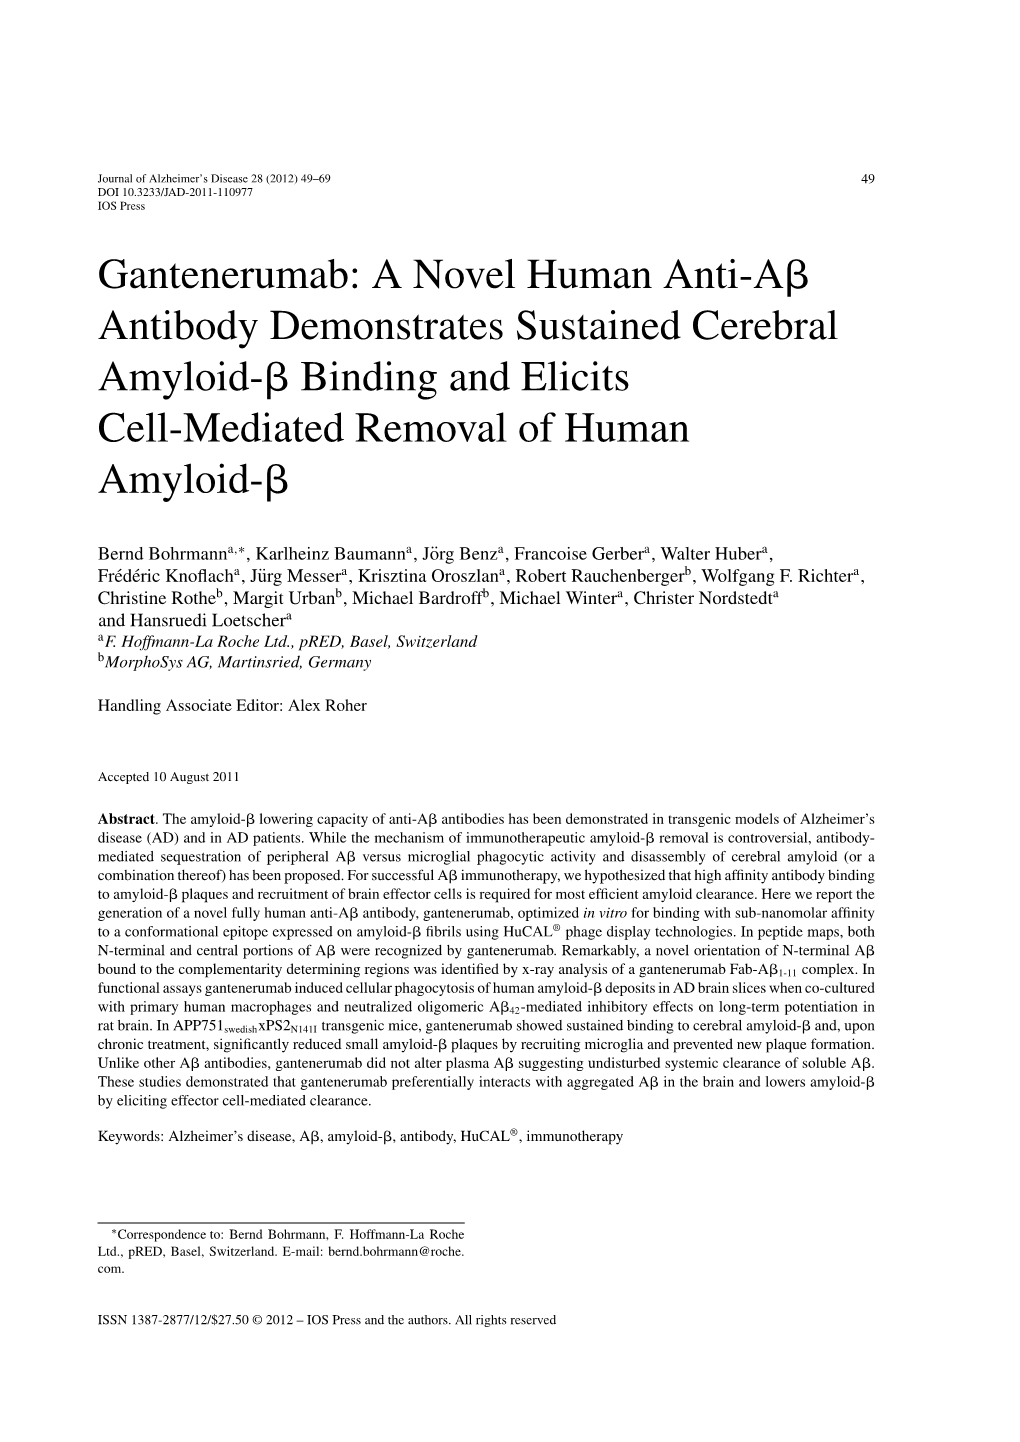 Gantenerumab: a Novel Human Anti-Aß Antibody Demonstrates